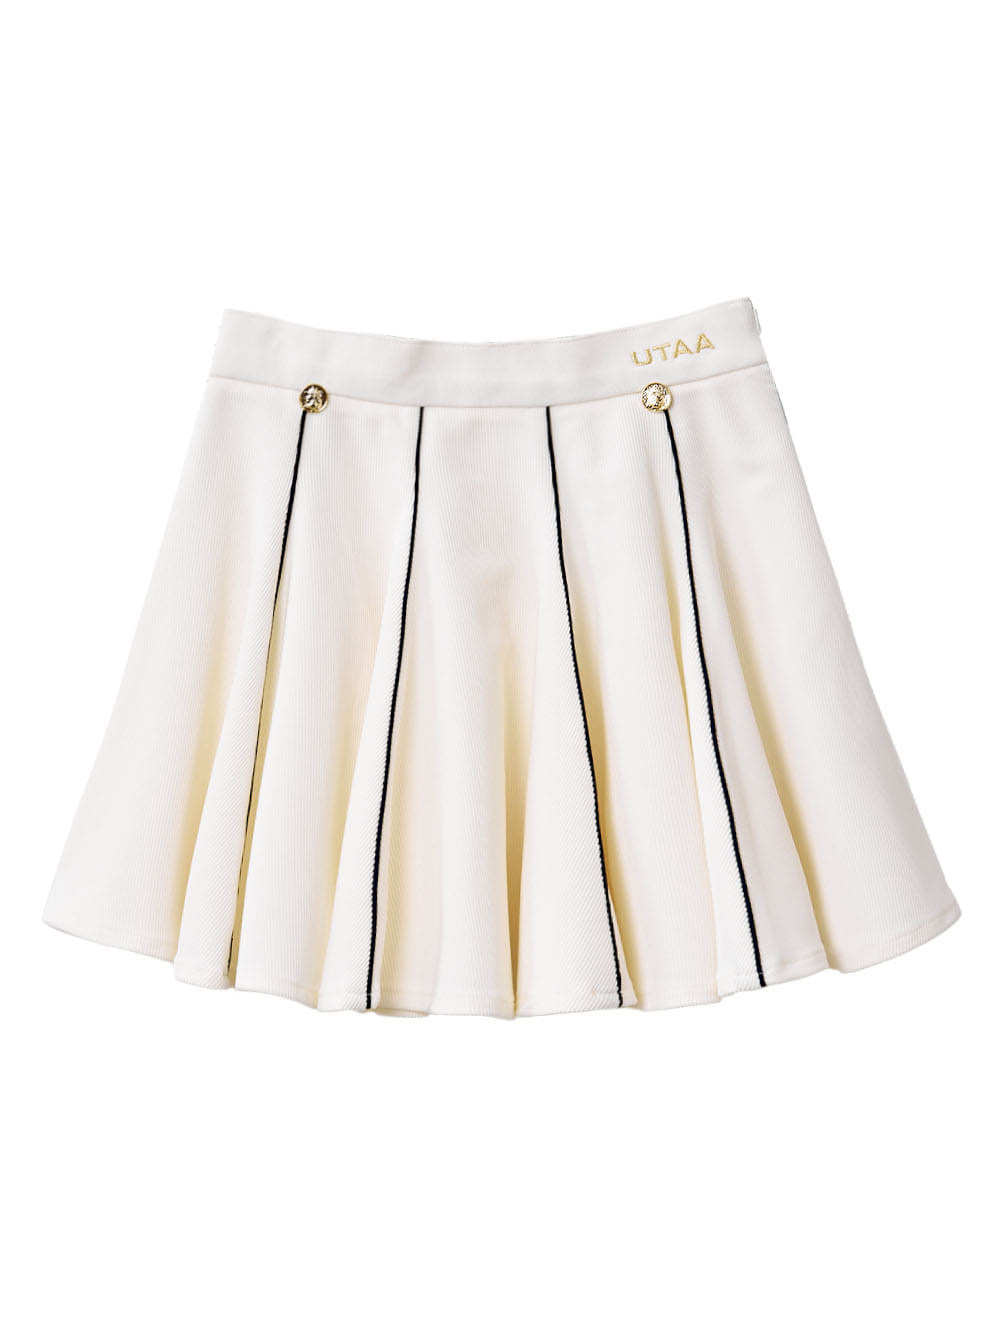 UTAA Ducat Angle Line Flare Skirt : White (UB4SSF408WH)